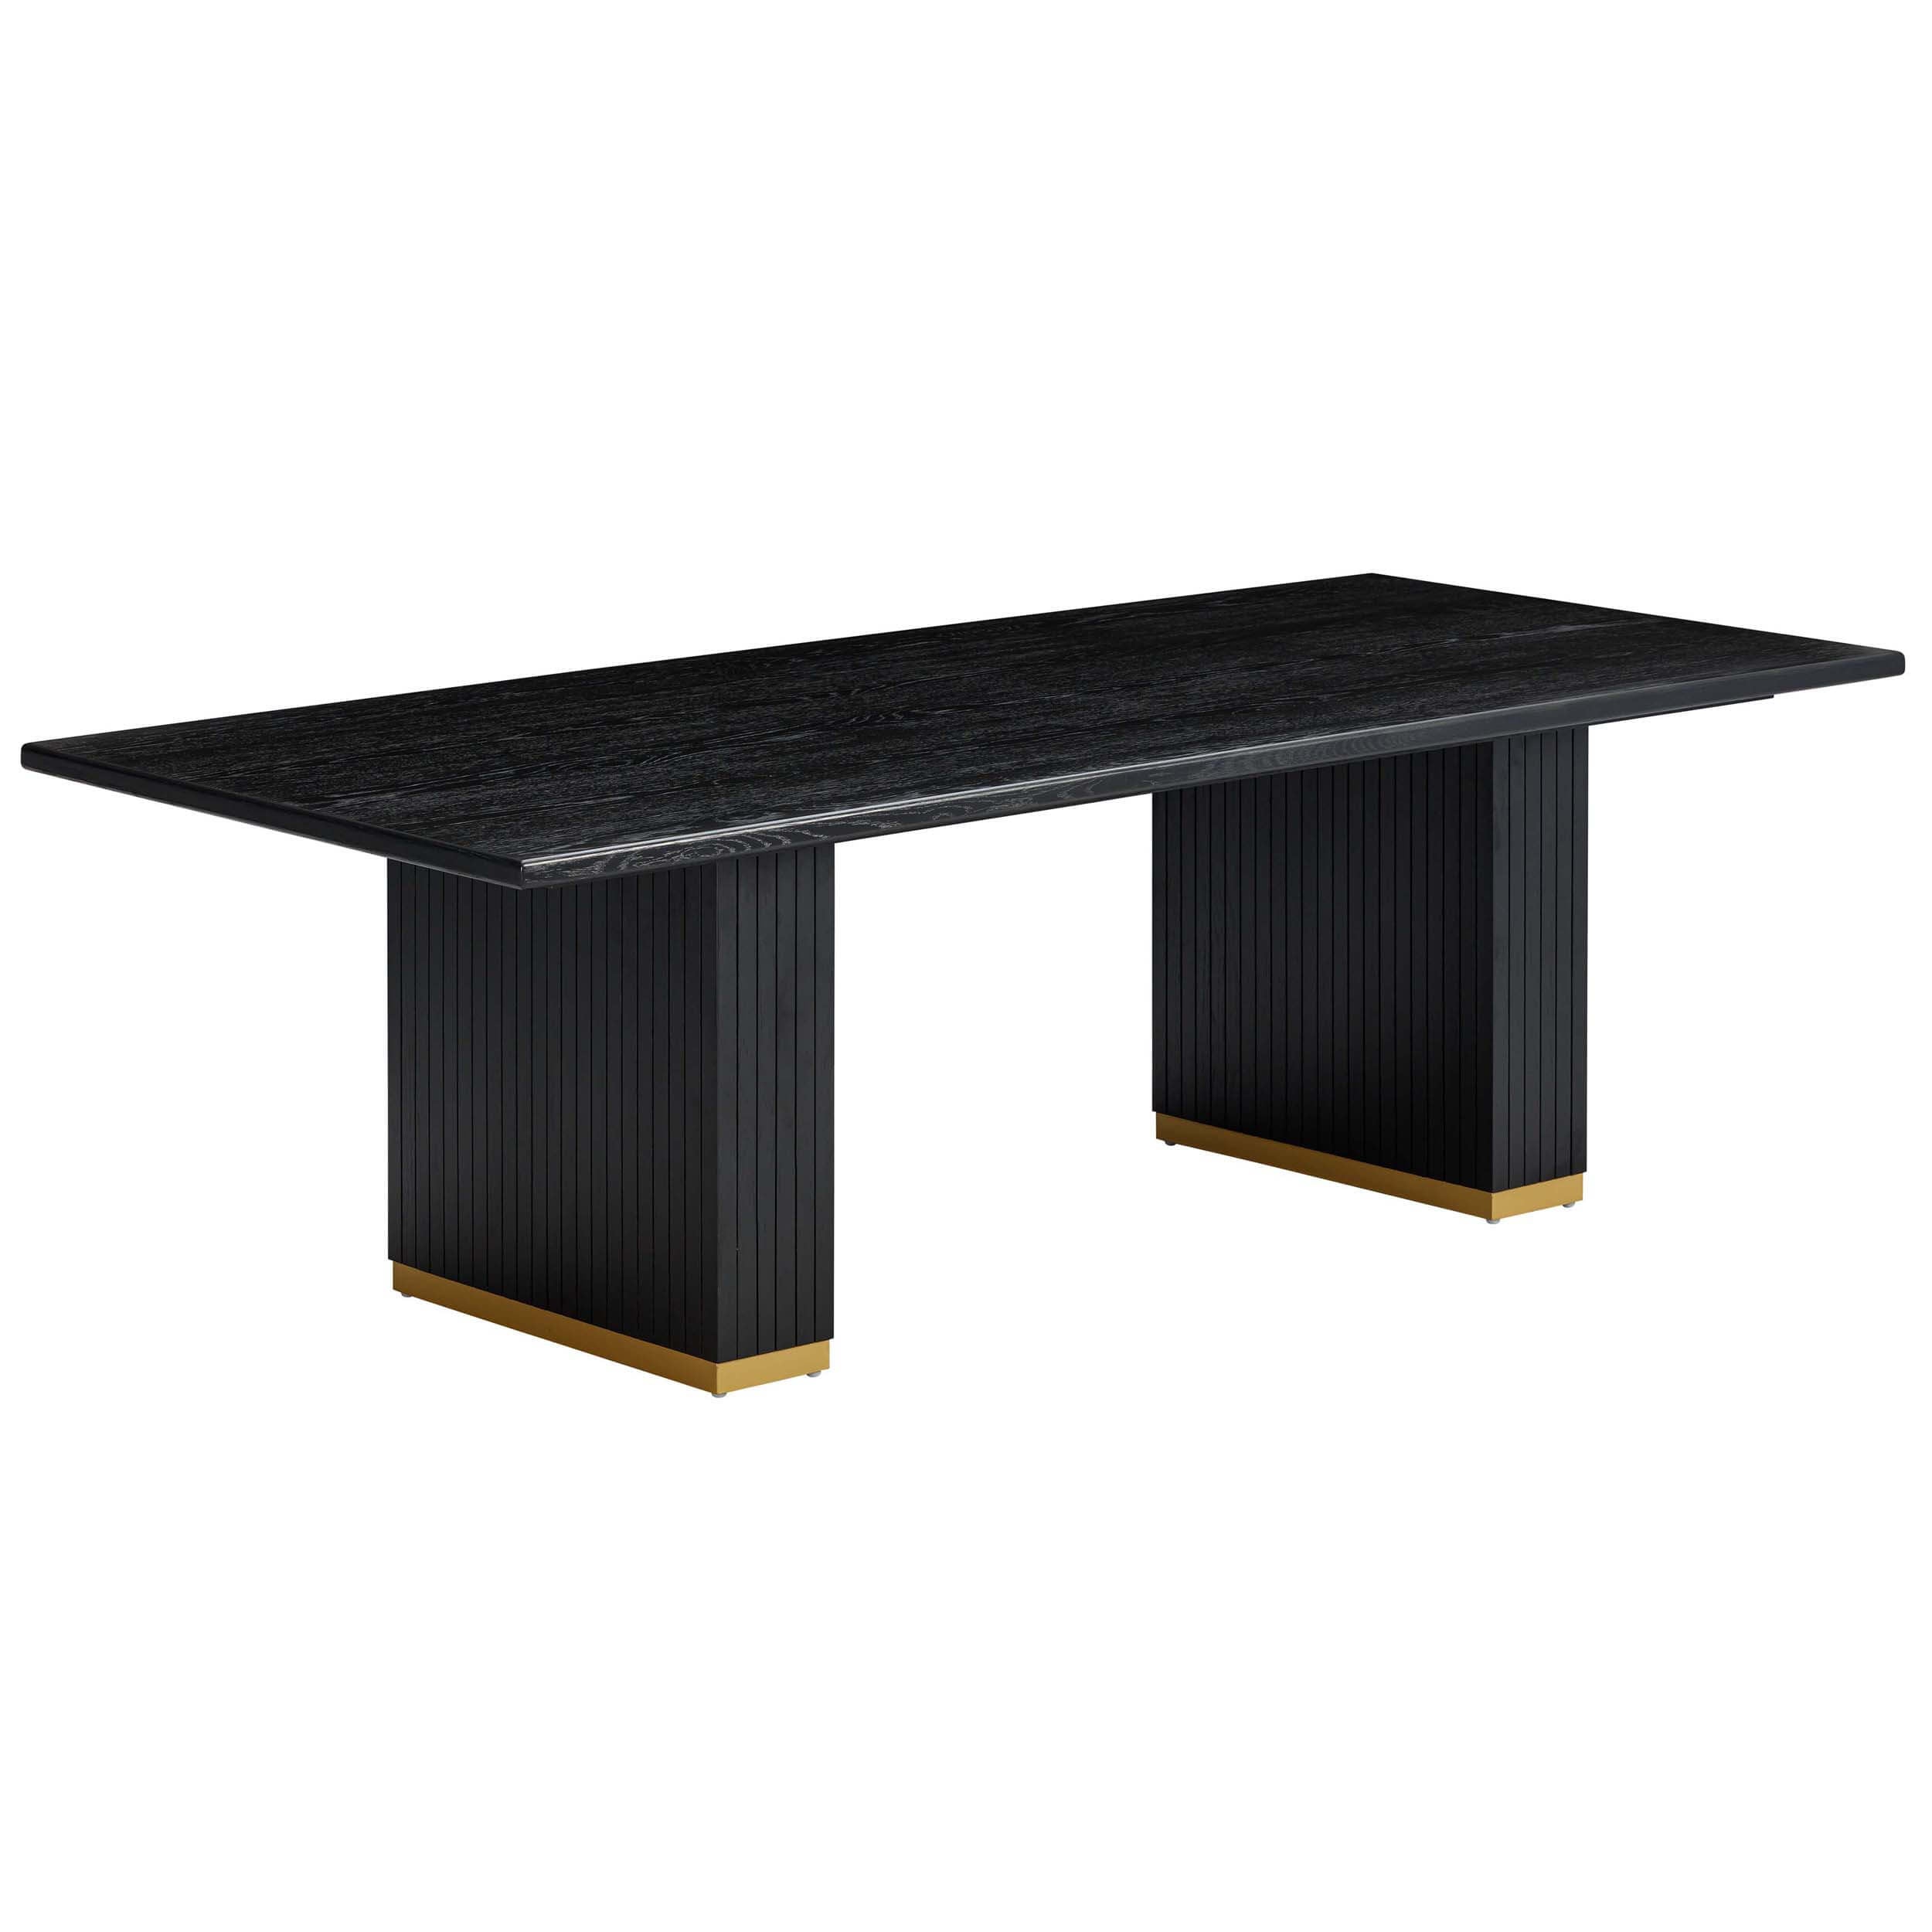 Image of Chelsea Rectangular Dining Table, Black